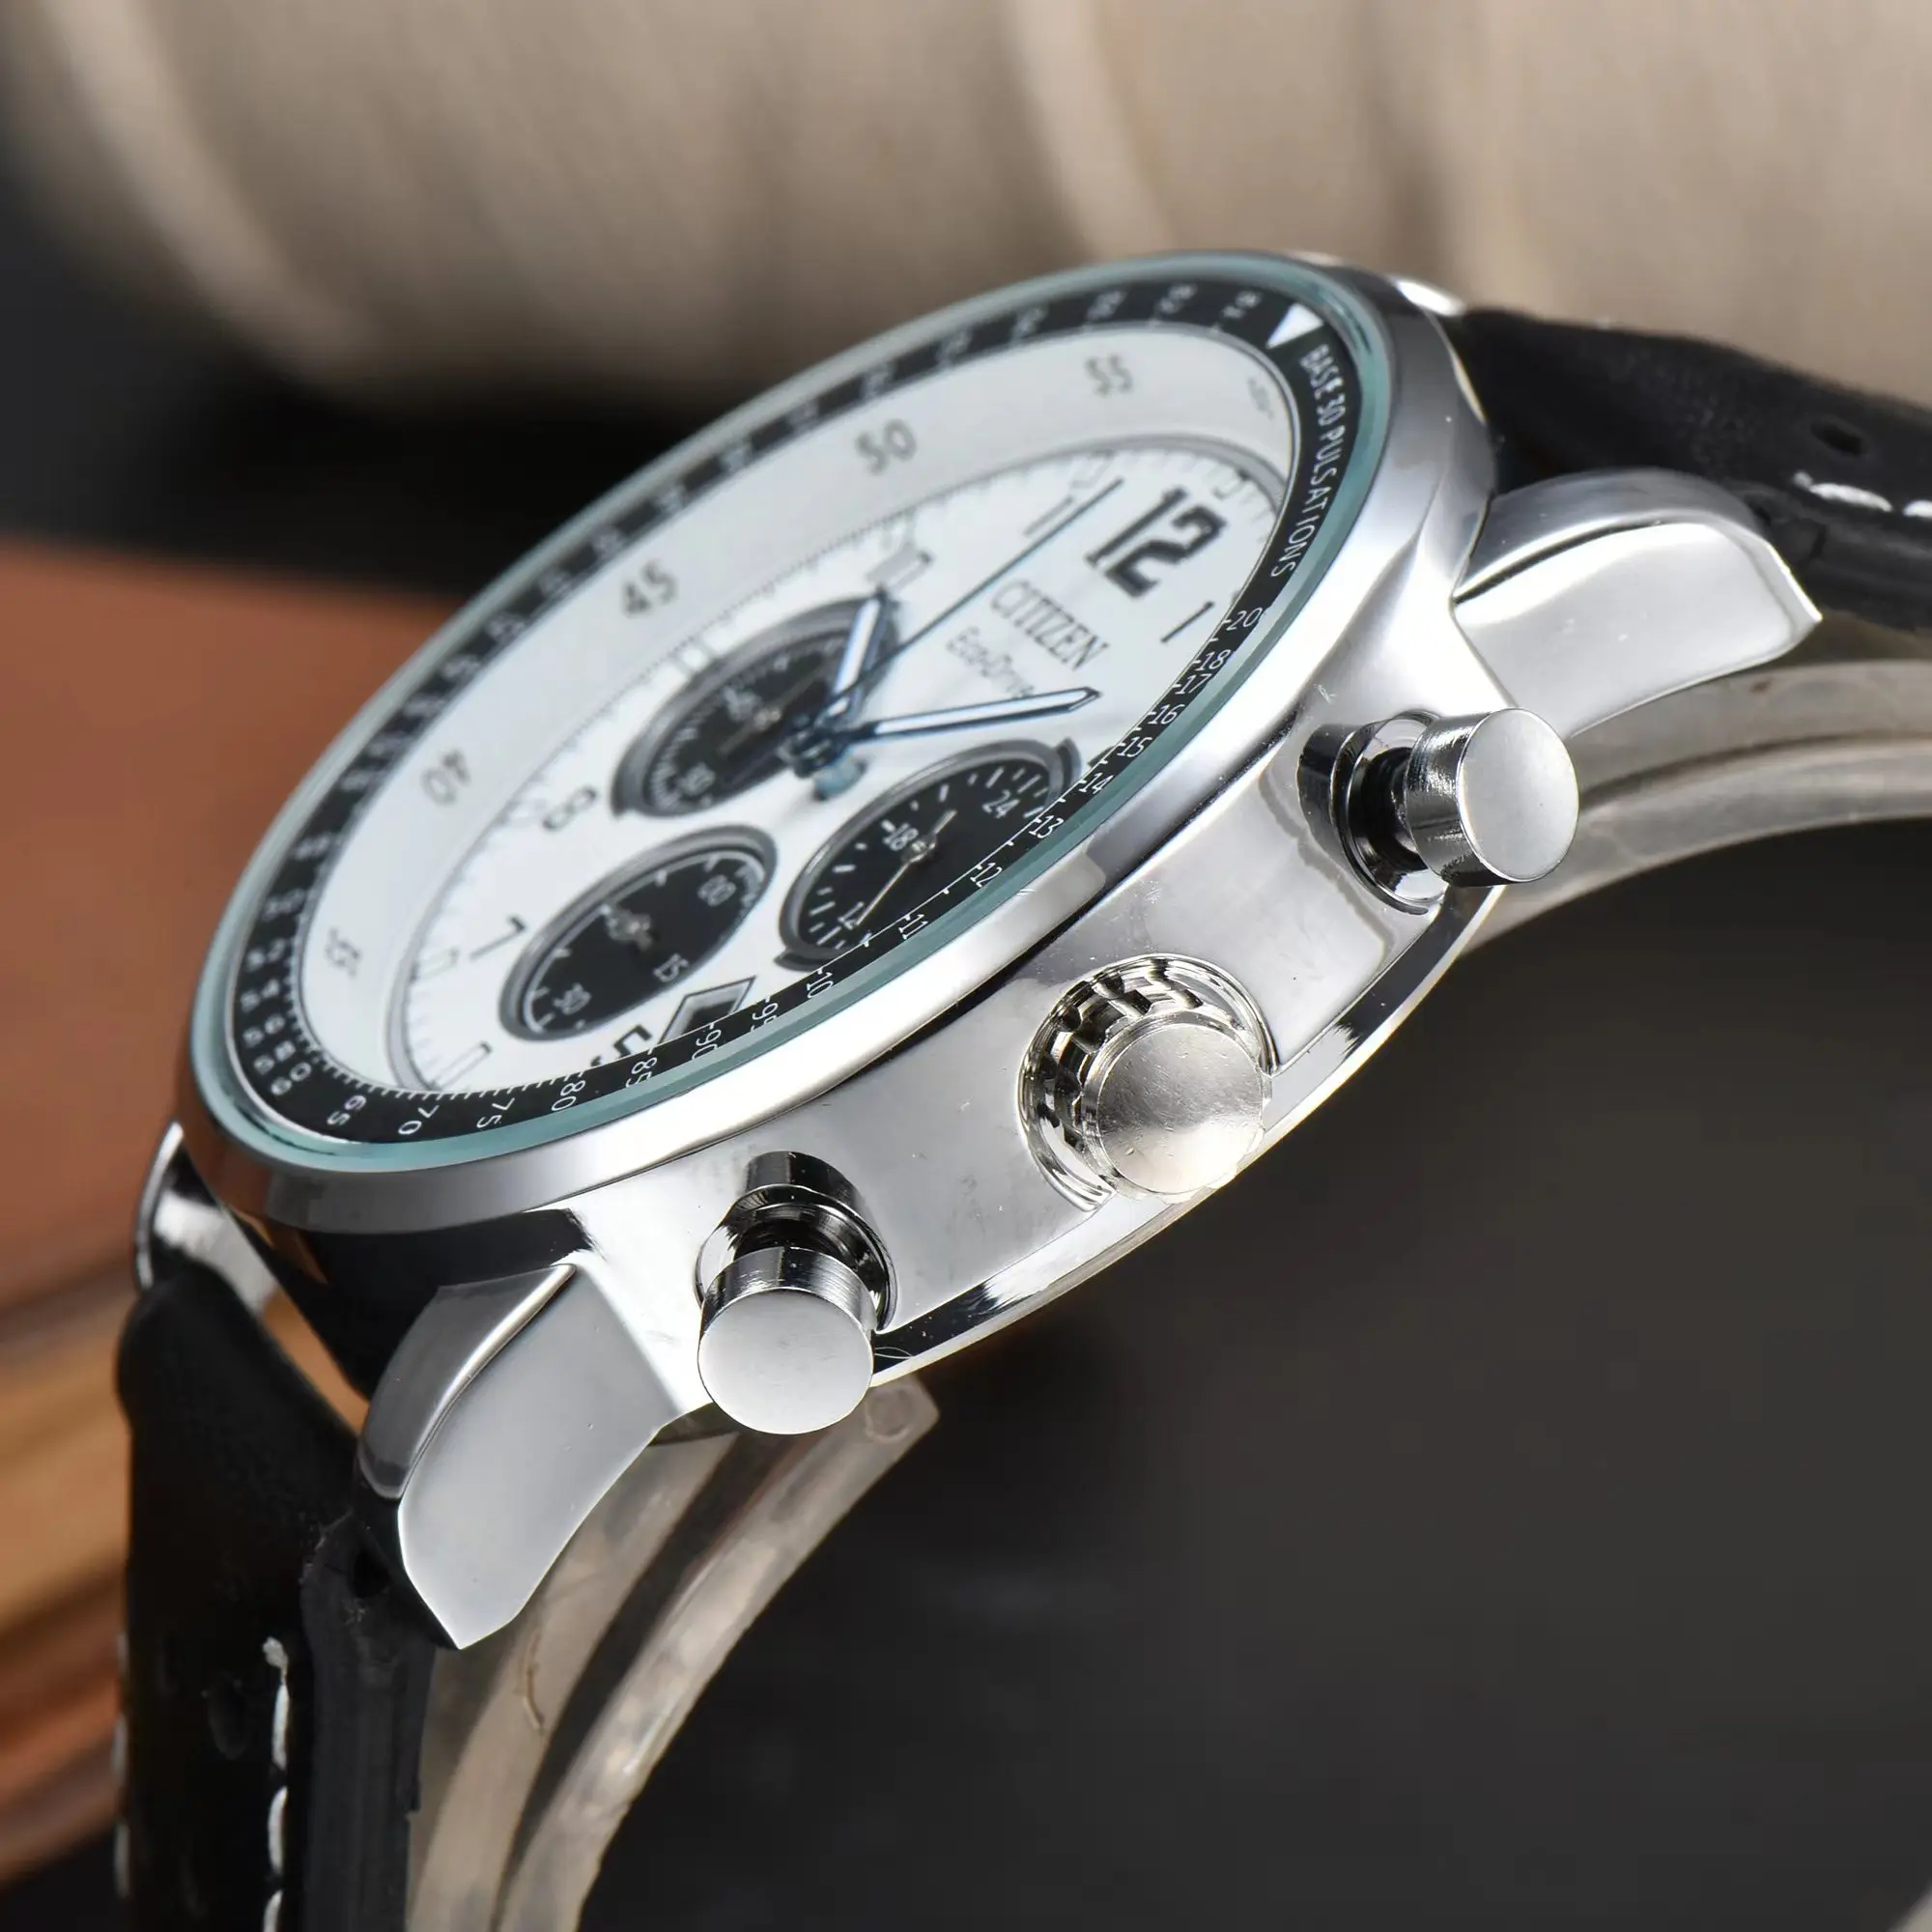 Citizen Luxury Brand Fashion Men's Multifunctional Waterproof Quartz Watch Leather Strap Relogio Reloj Hombre